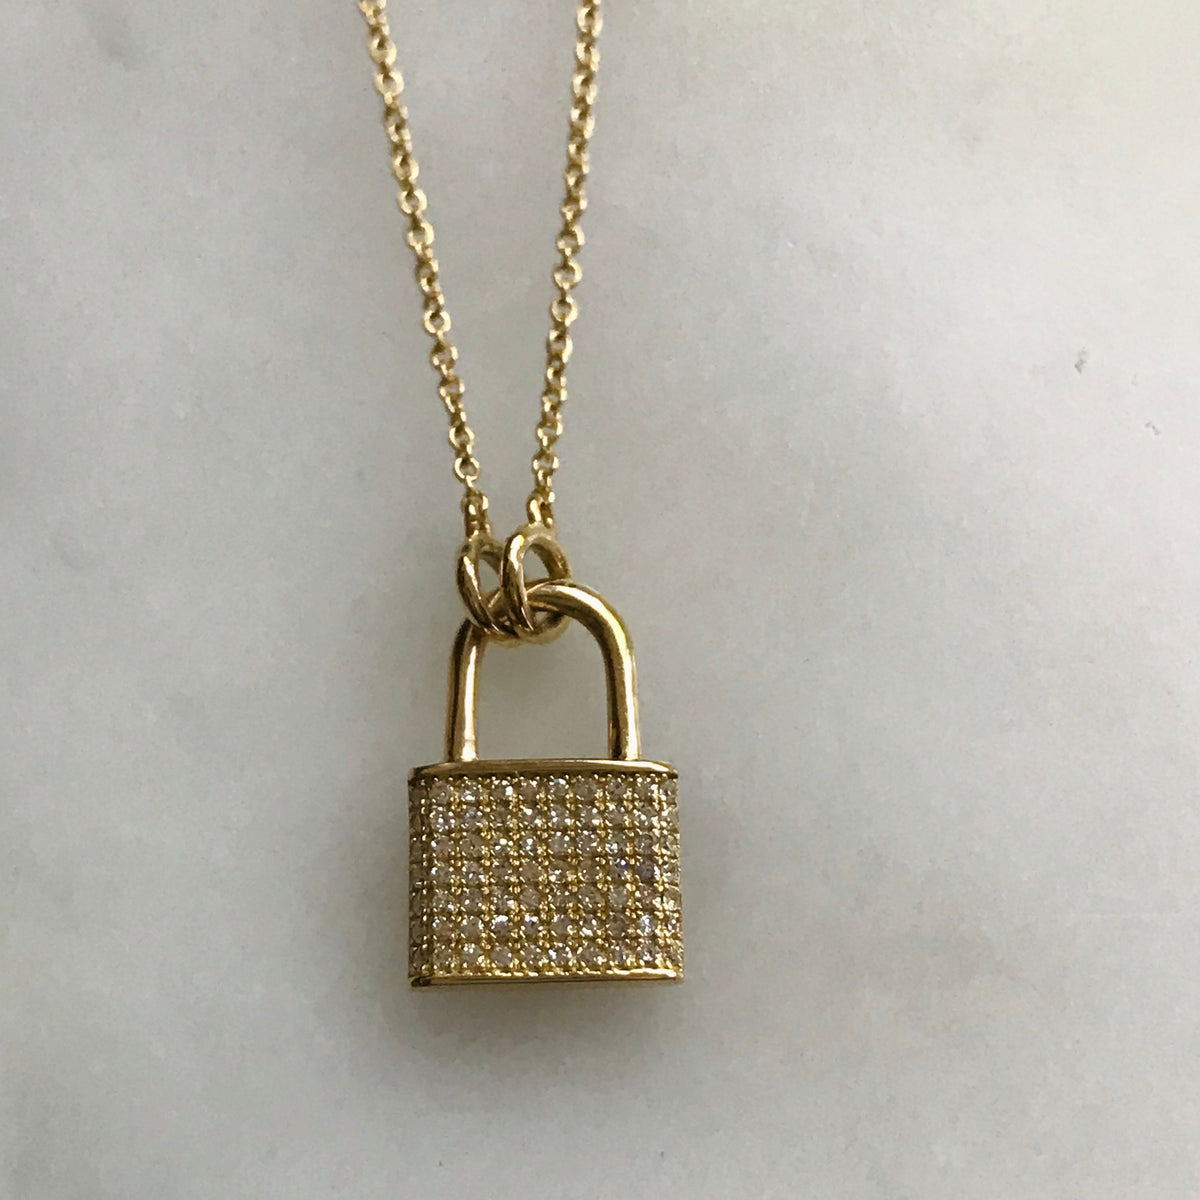 pavé diamond lock necklace 14k in adjustable 15 - 20” chain ...